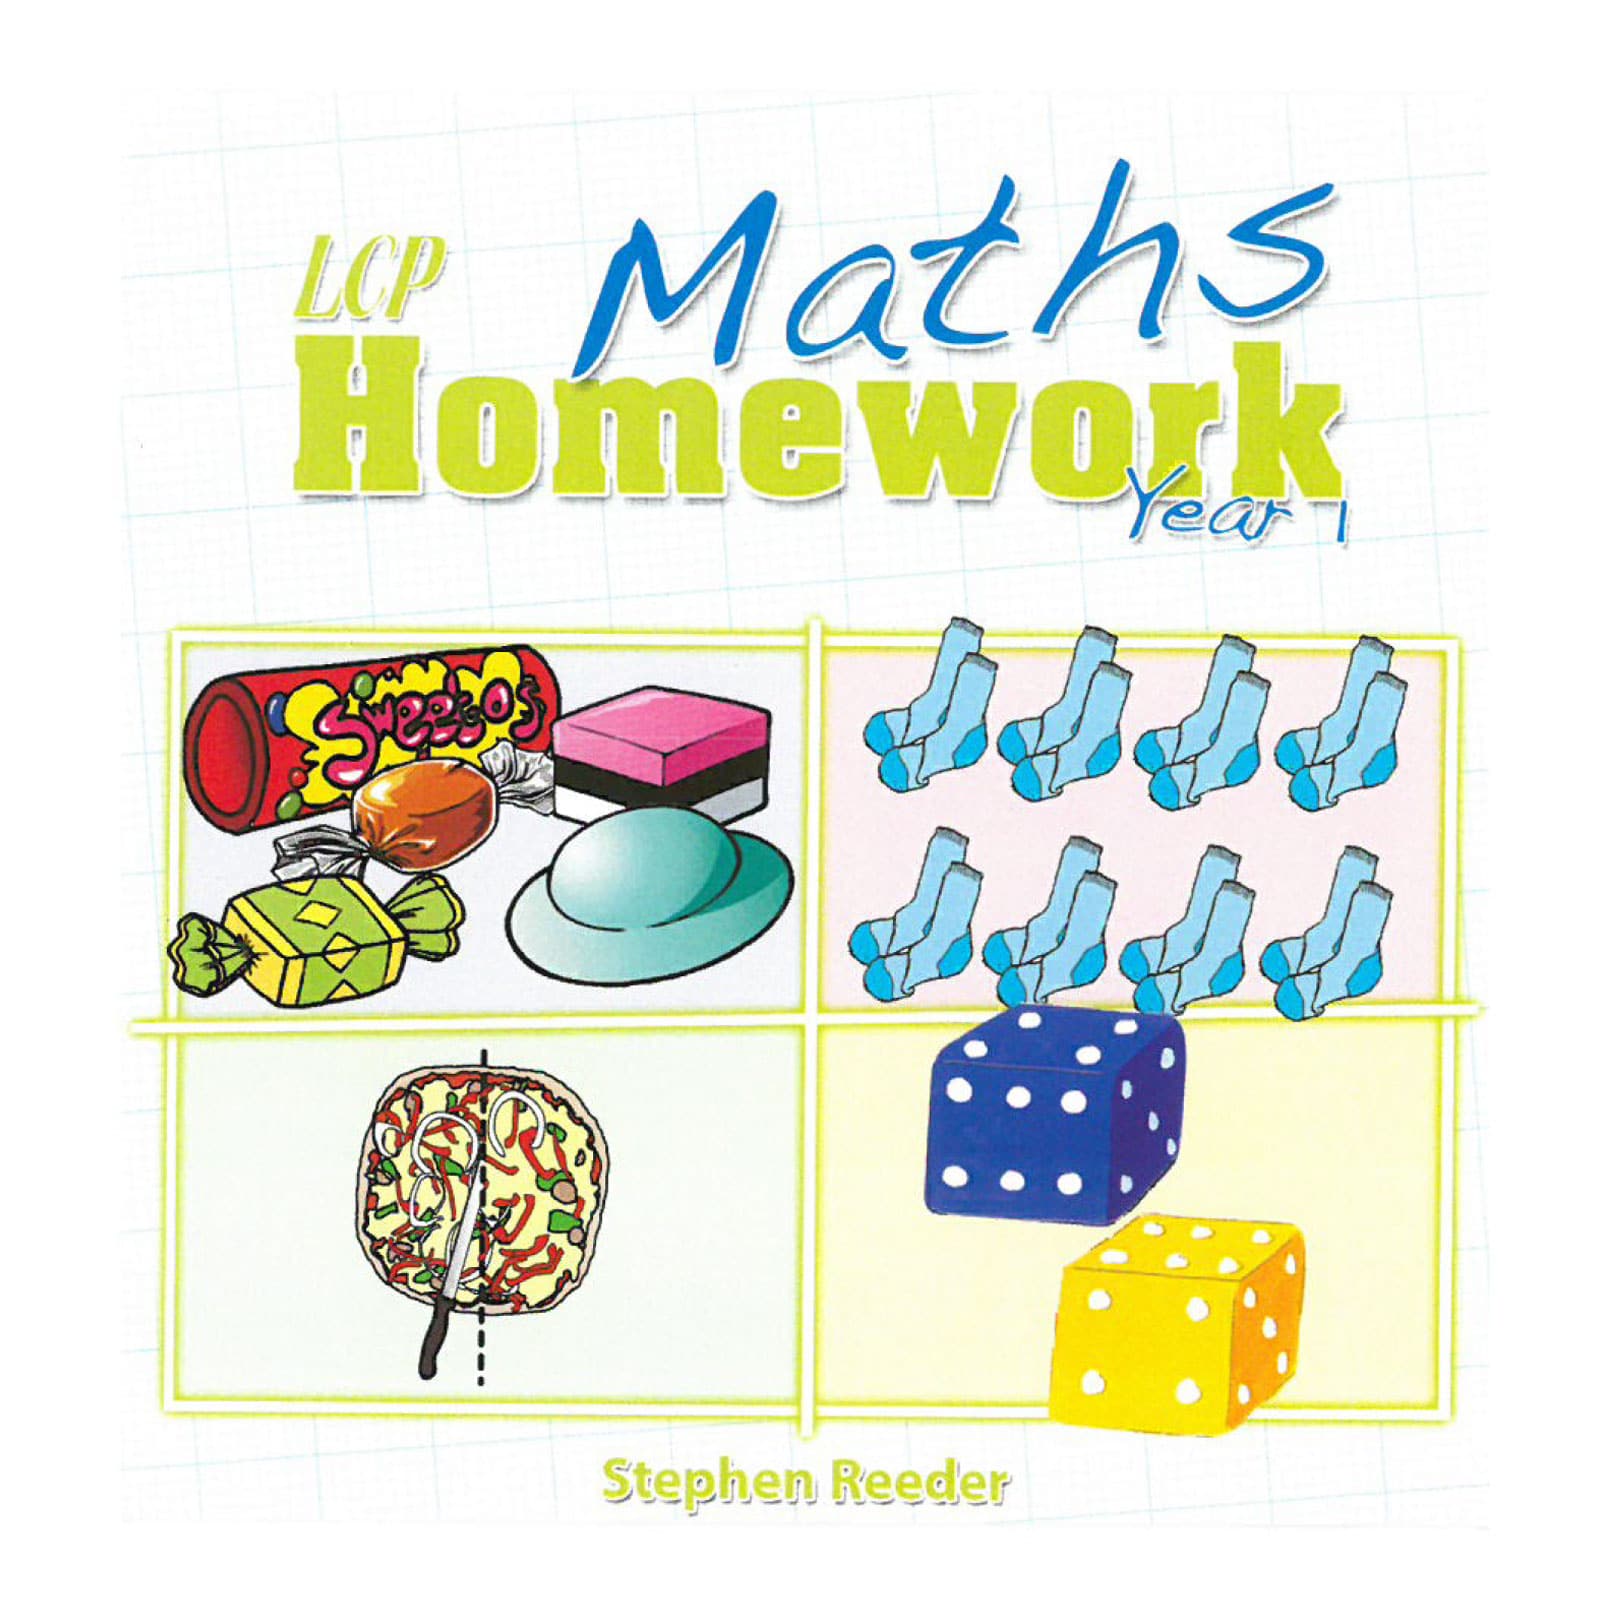 homework help in maths